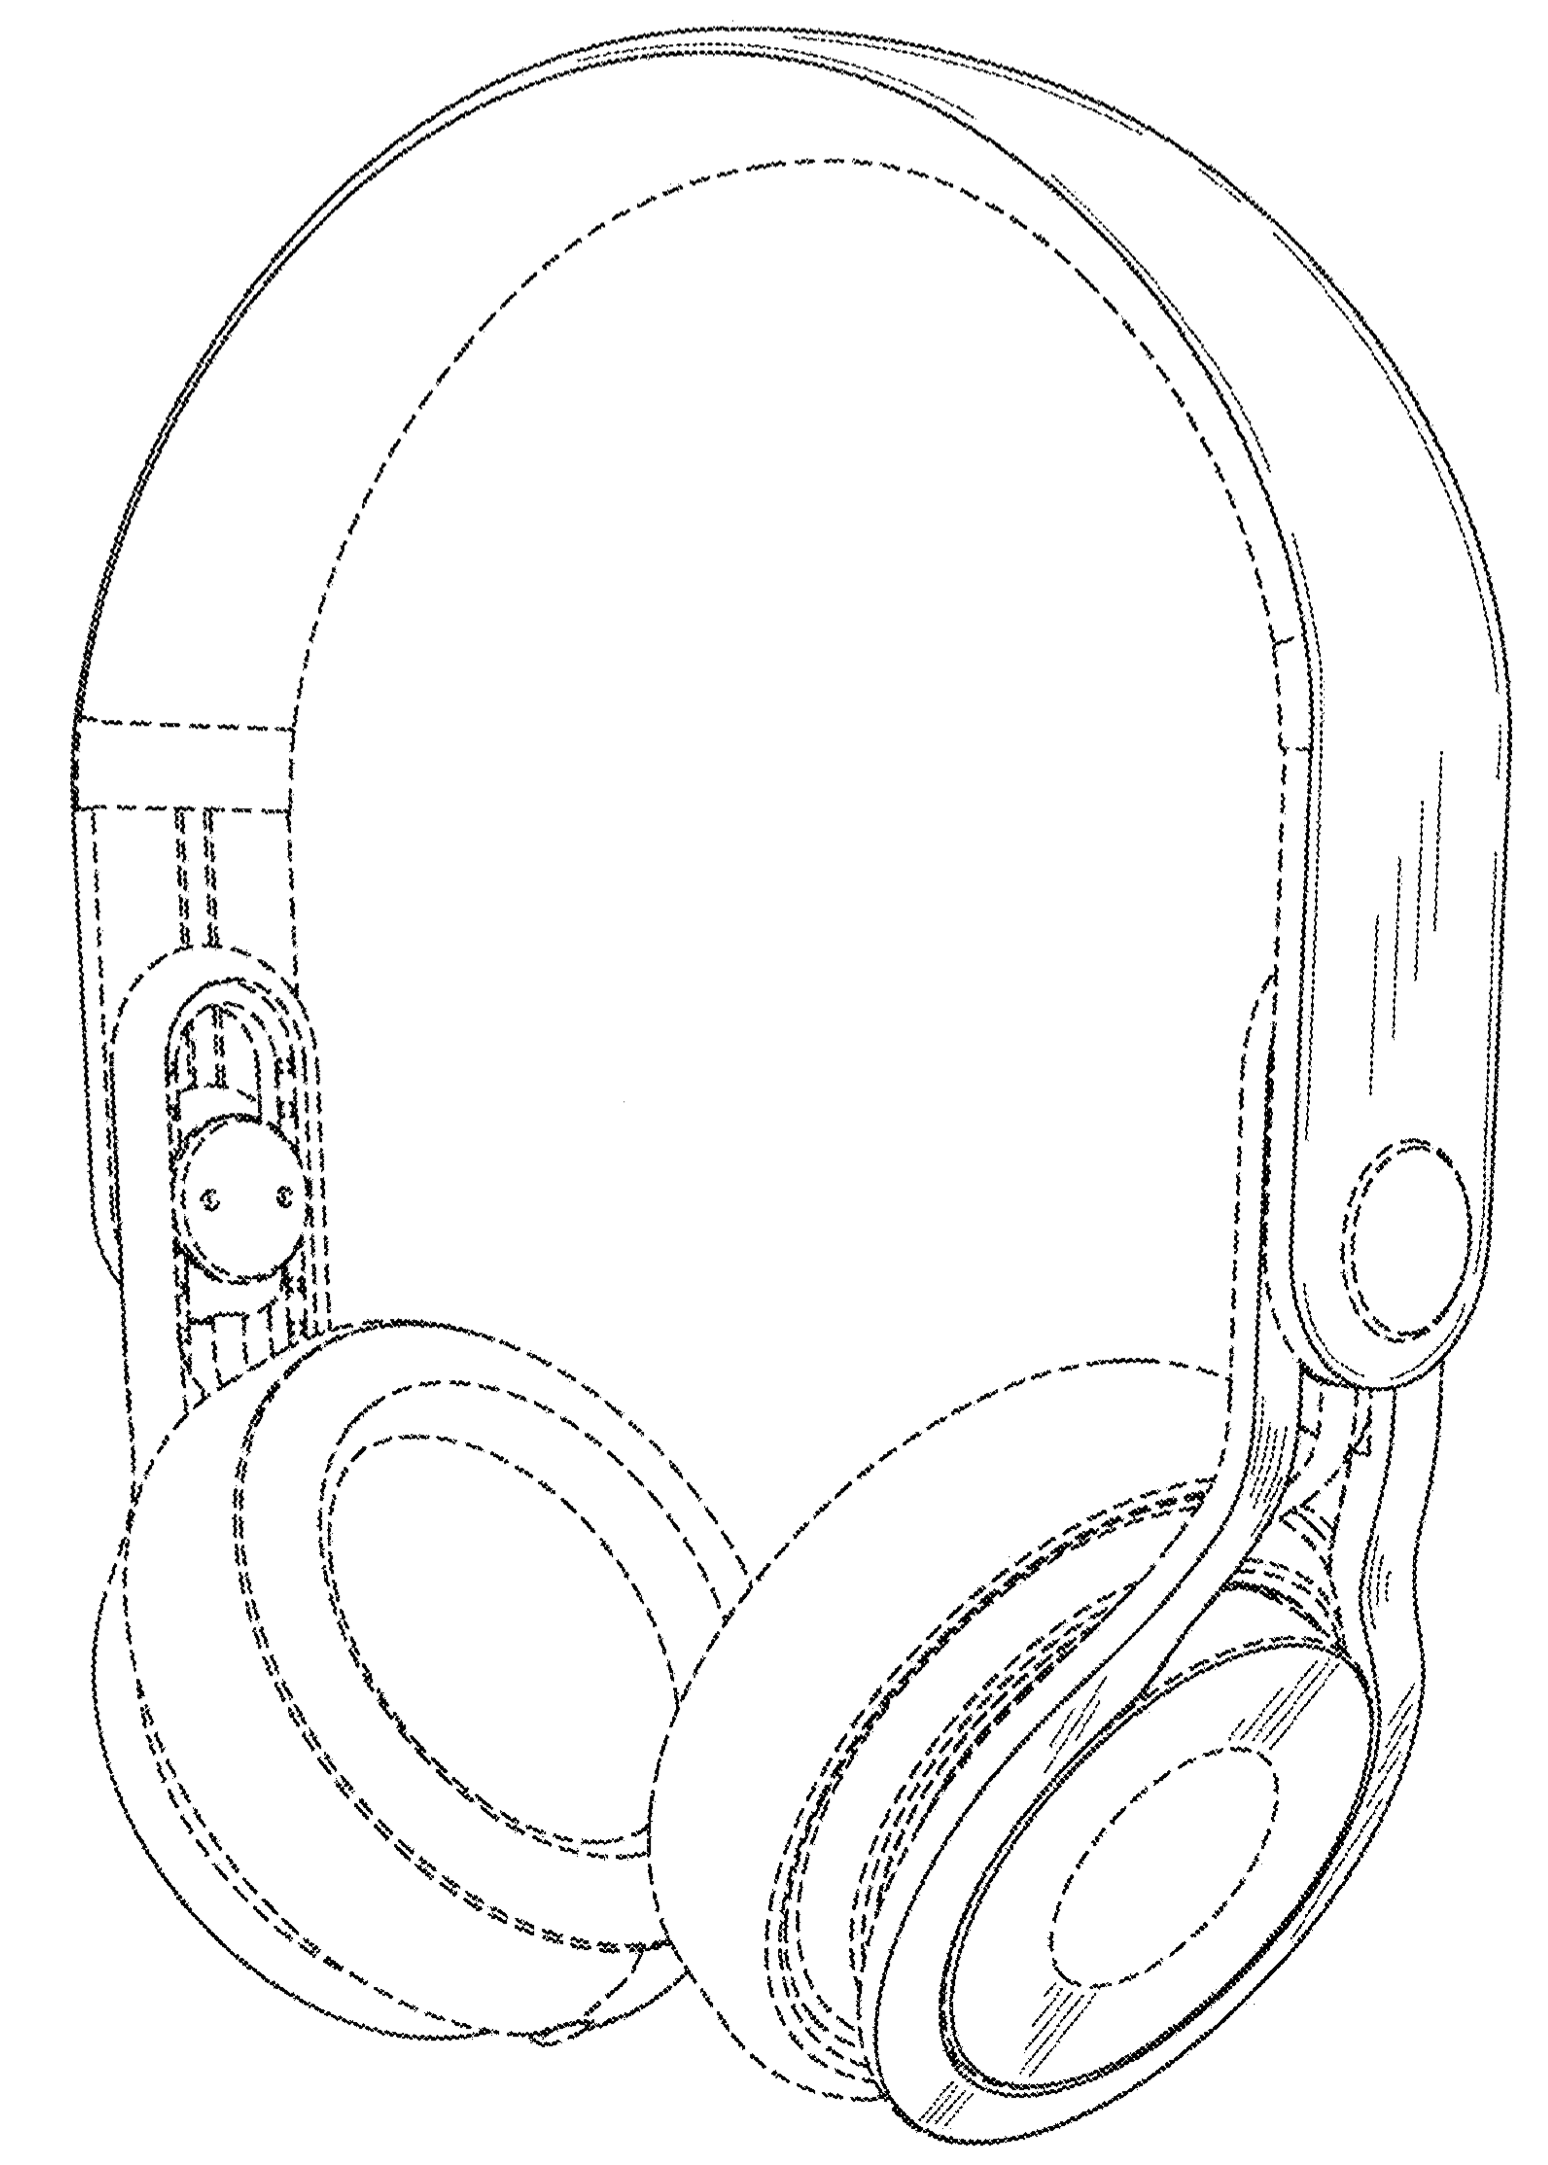 Apple patent Beats Mixr drawing 001